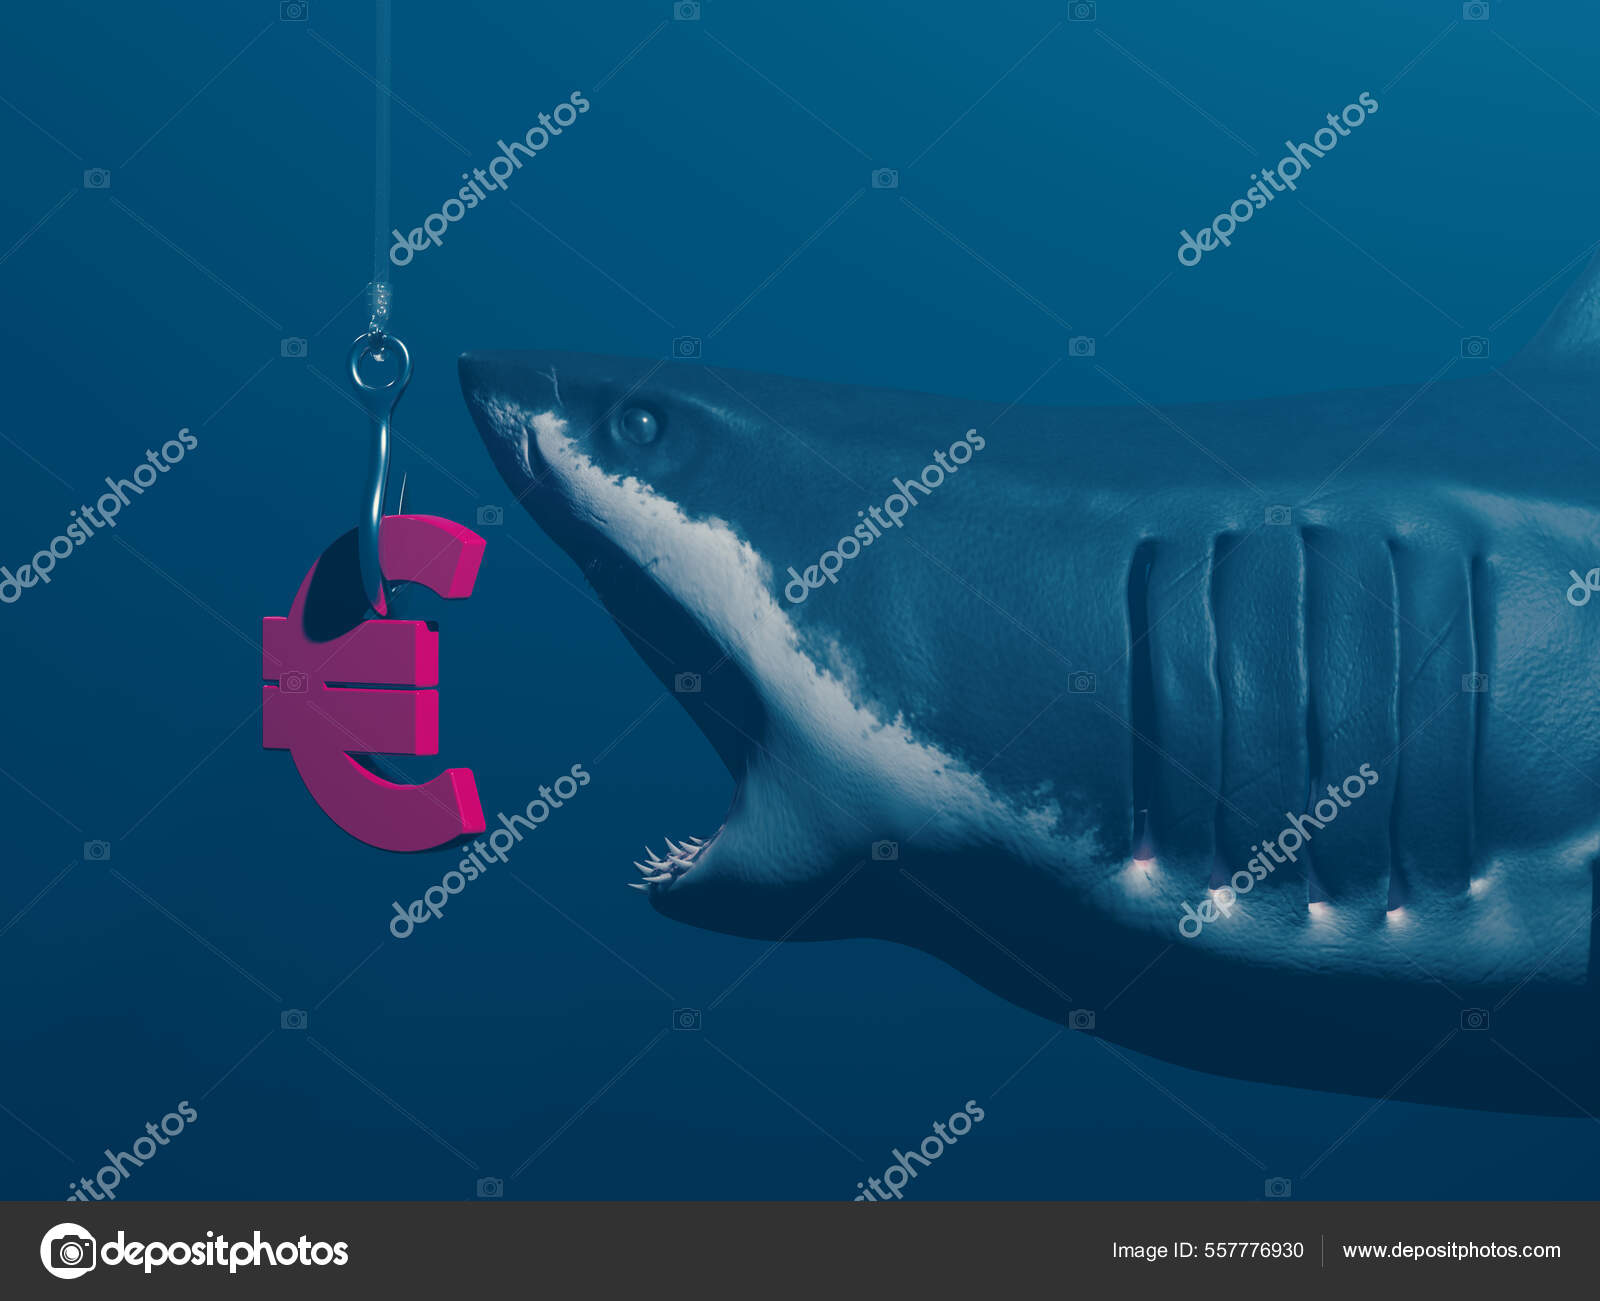 https://st.depositphotos.com/16955728/55777/i/1600/depositphotos_557776930-stock-photo-great-white-shark-red-colored.jpg